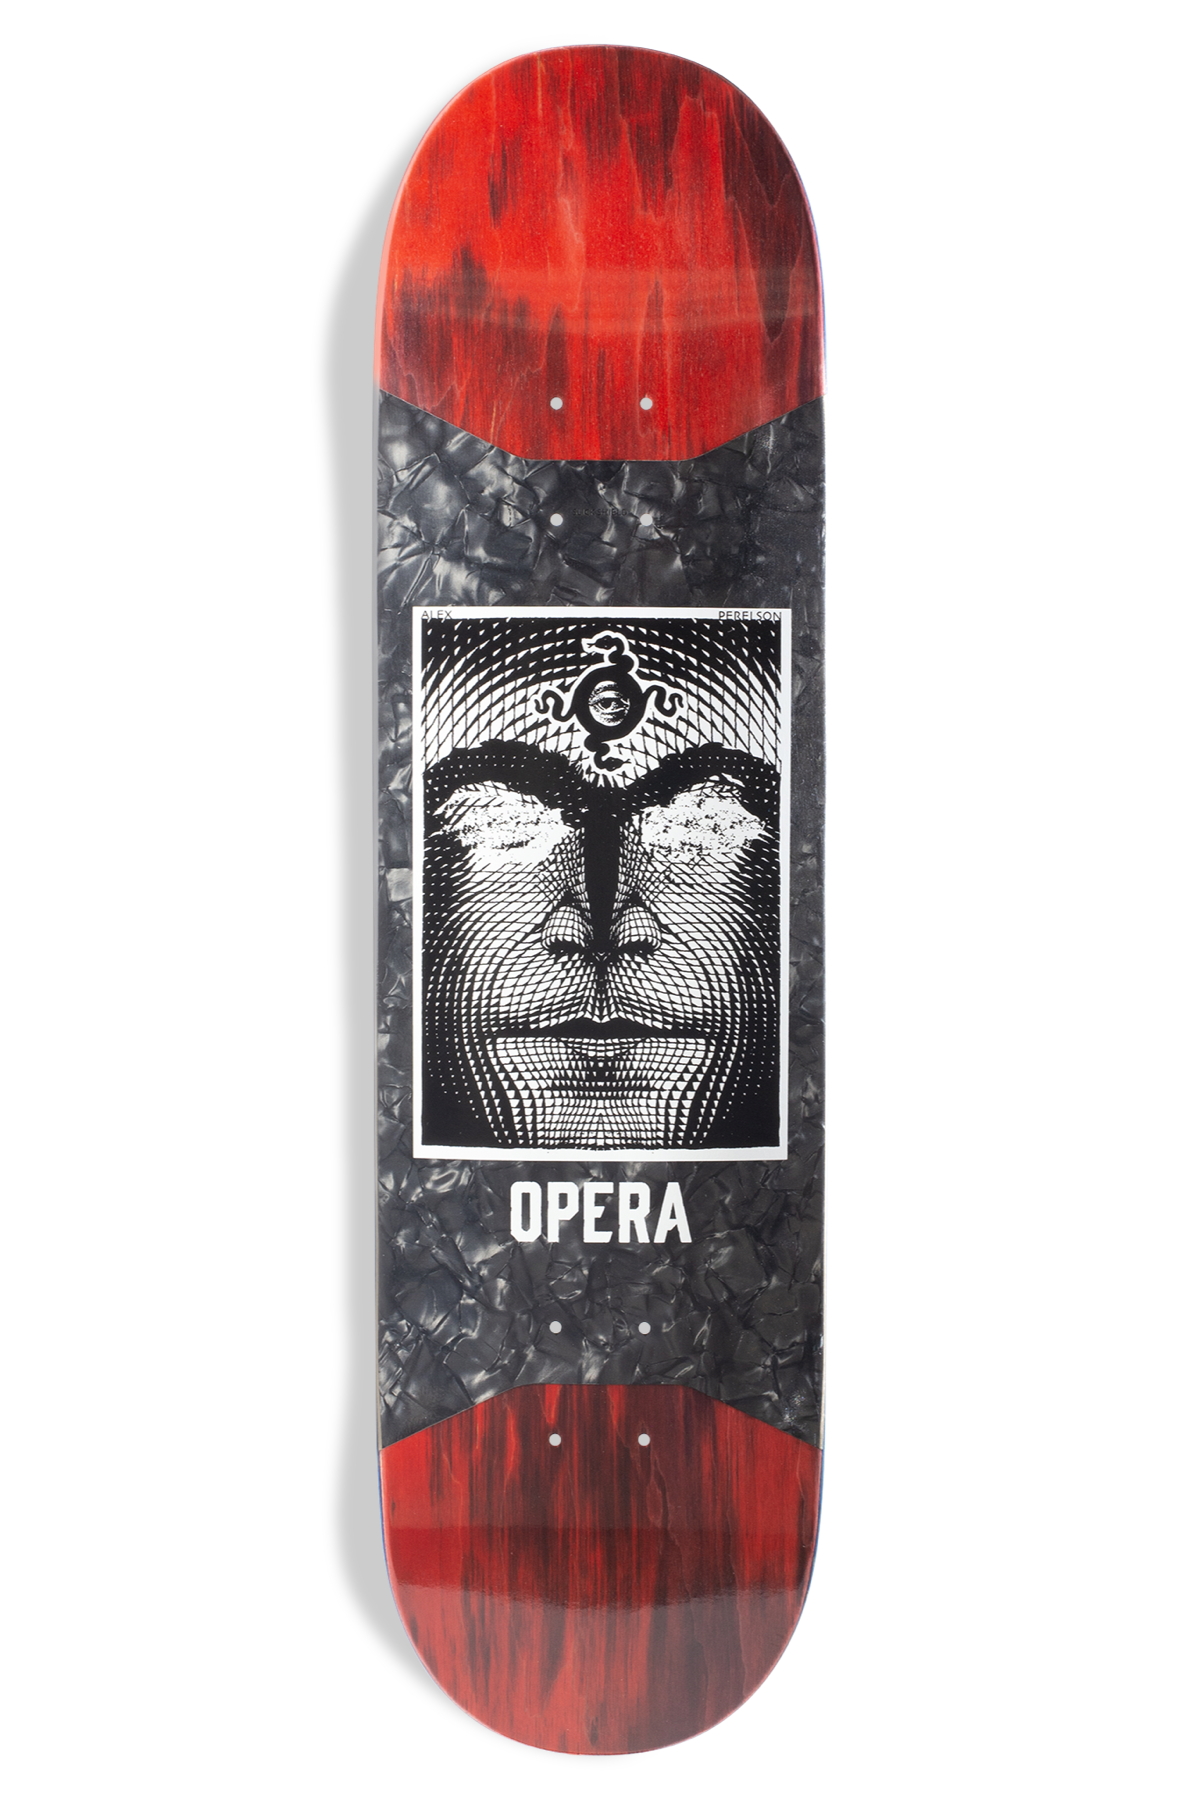 Opera Alex Perelson No Evil Ex7 Slick Shield Skateboard Deck - 8.38"